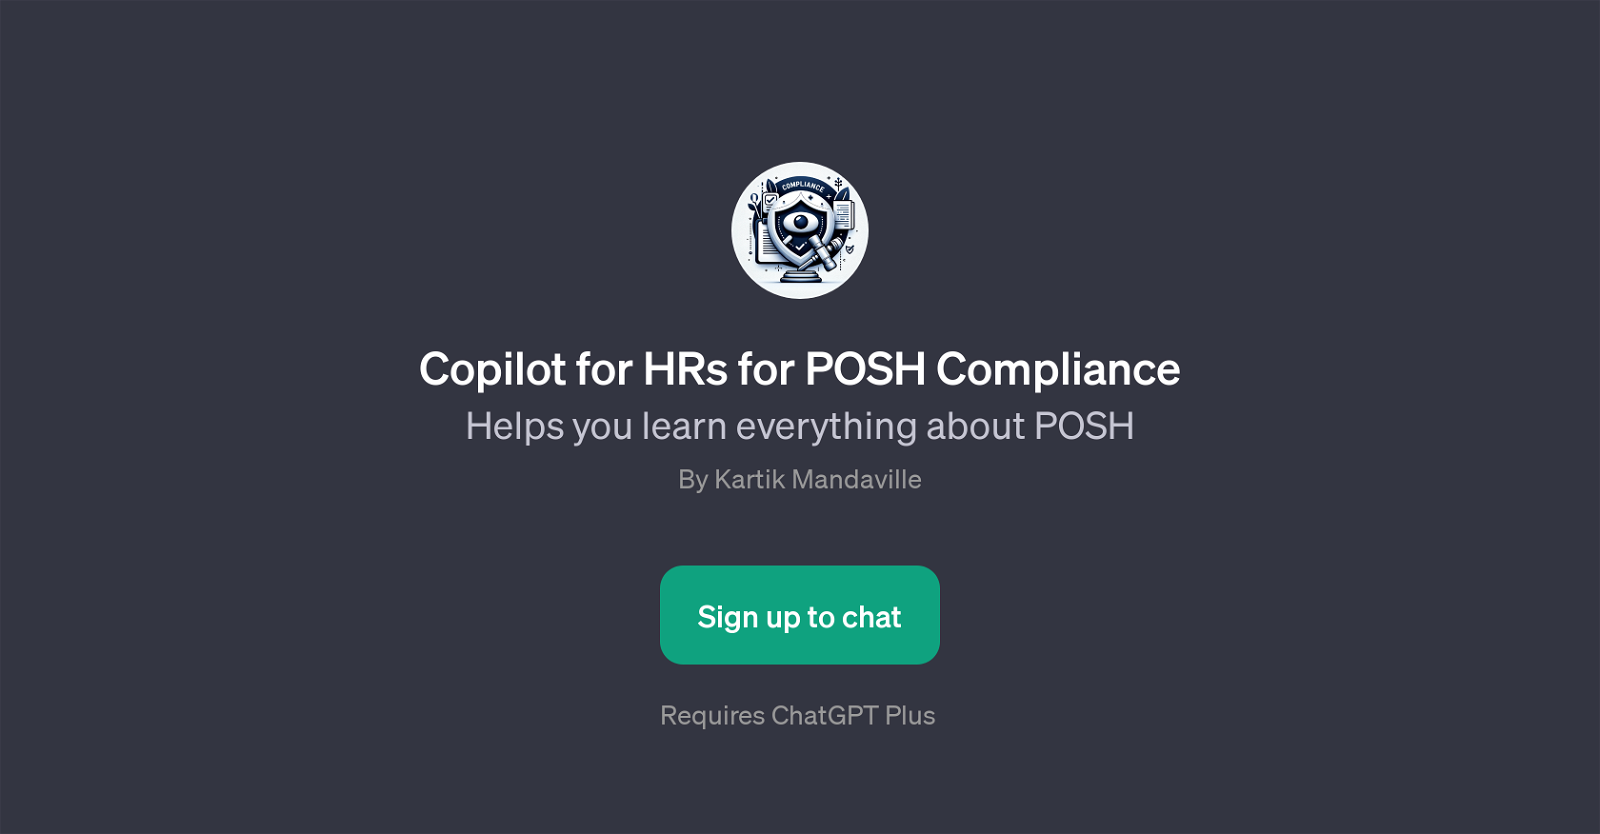 Copilot for HRs for POSH Compliance website